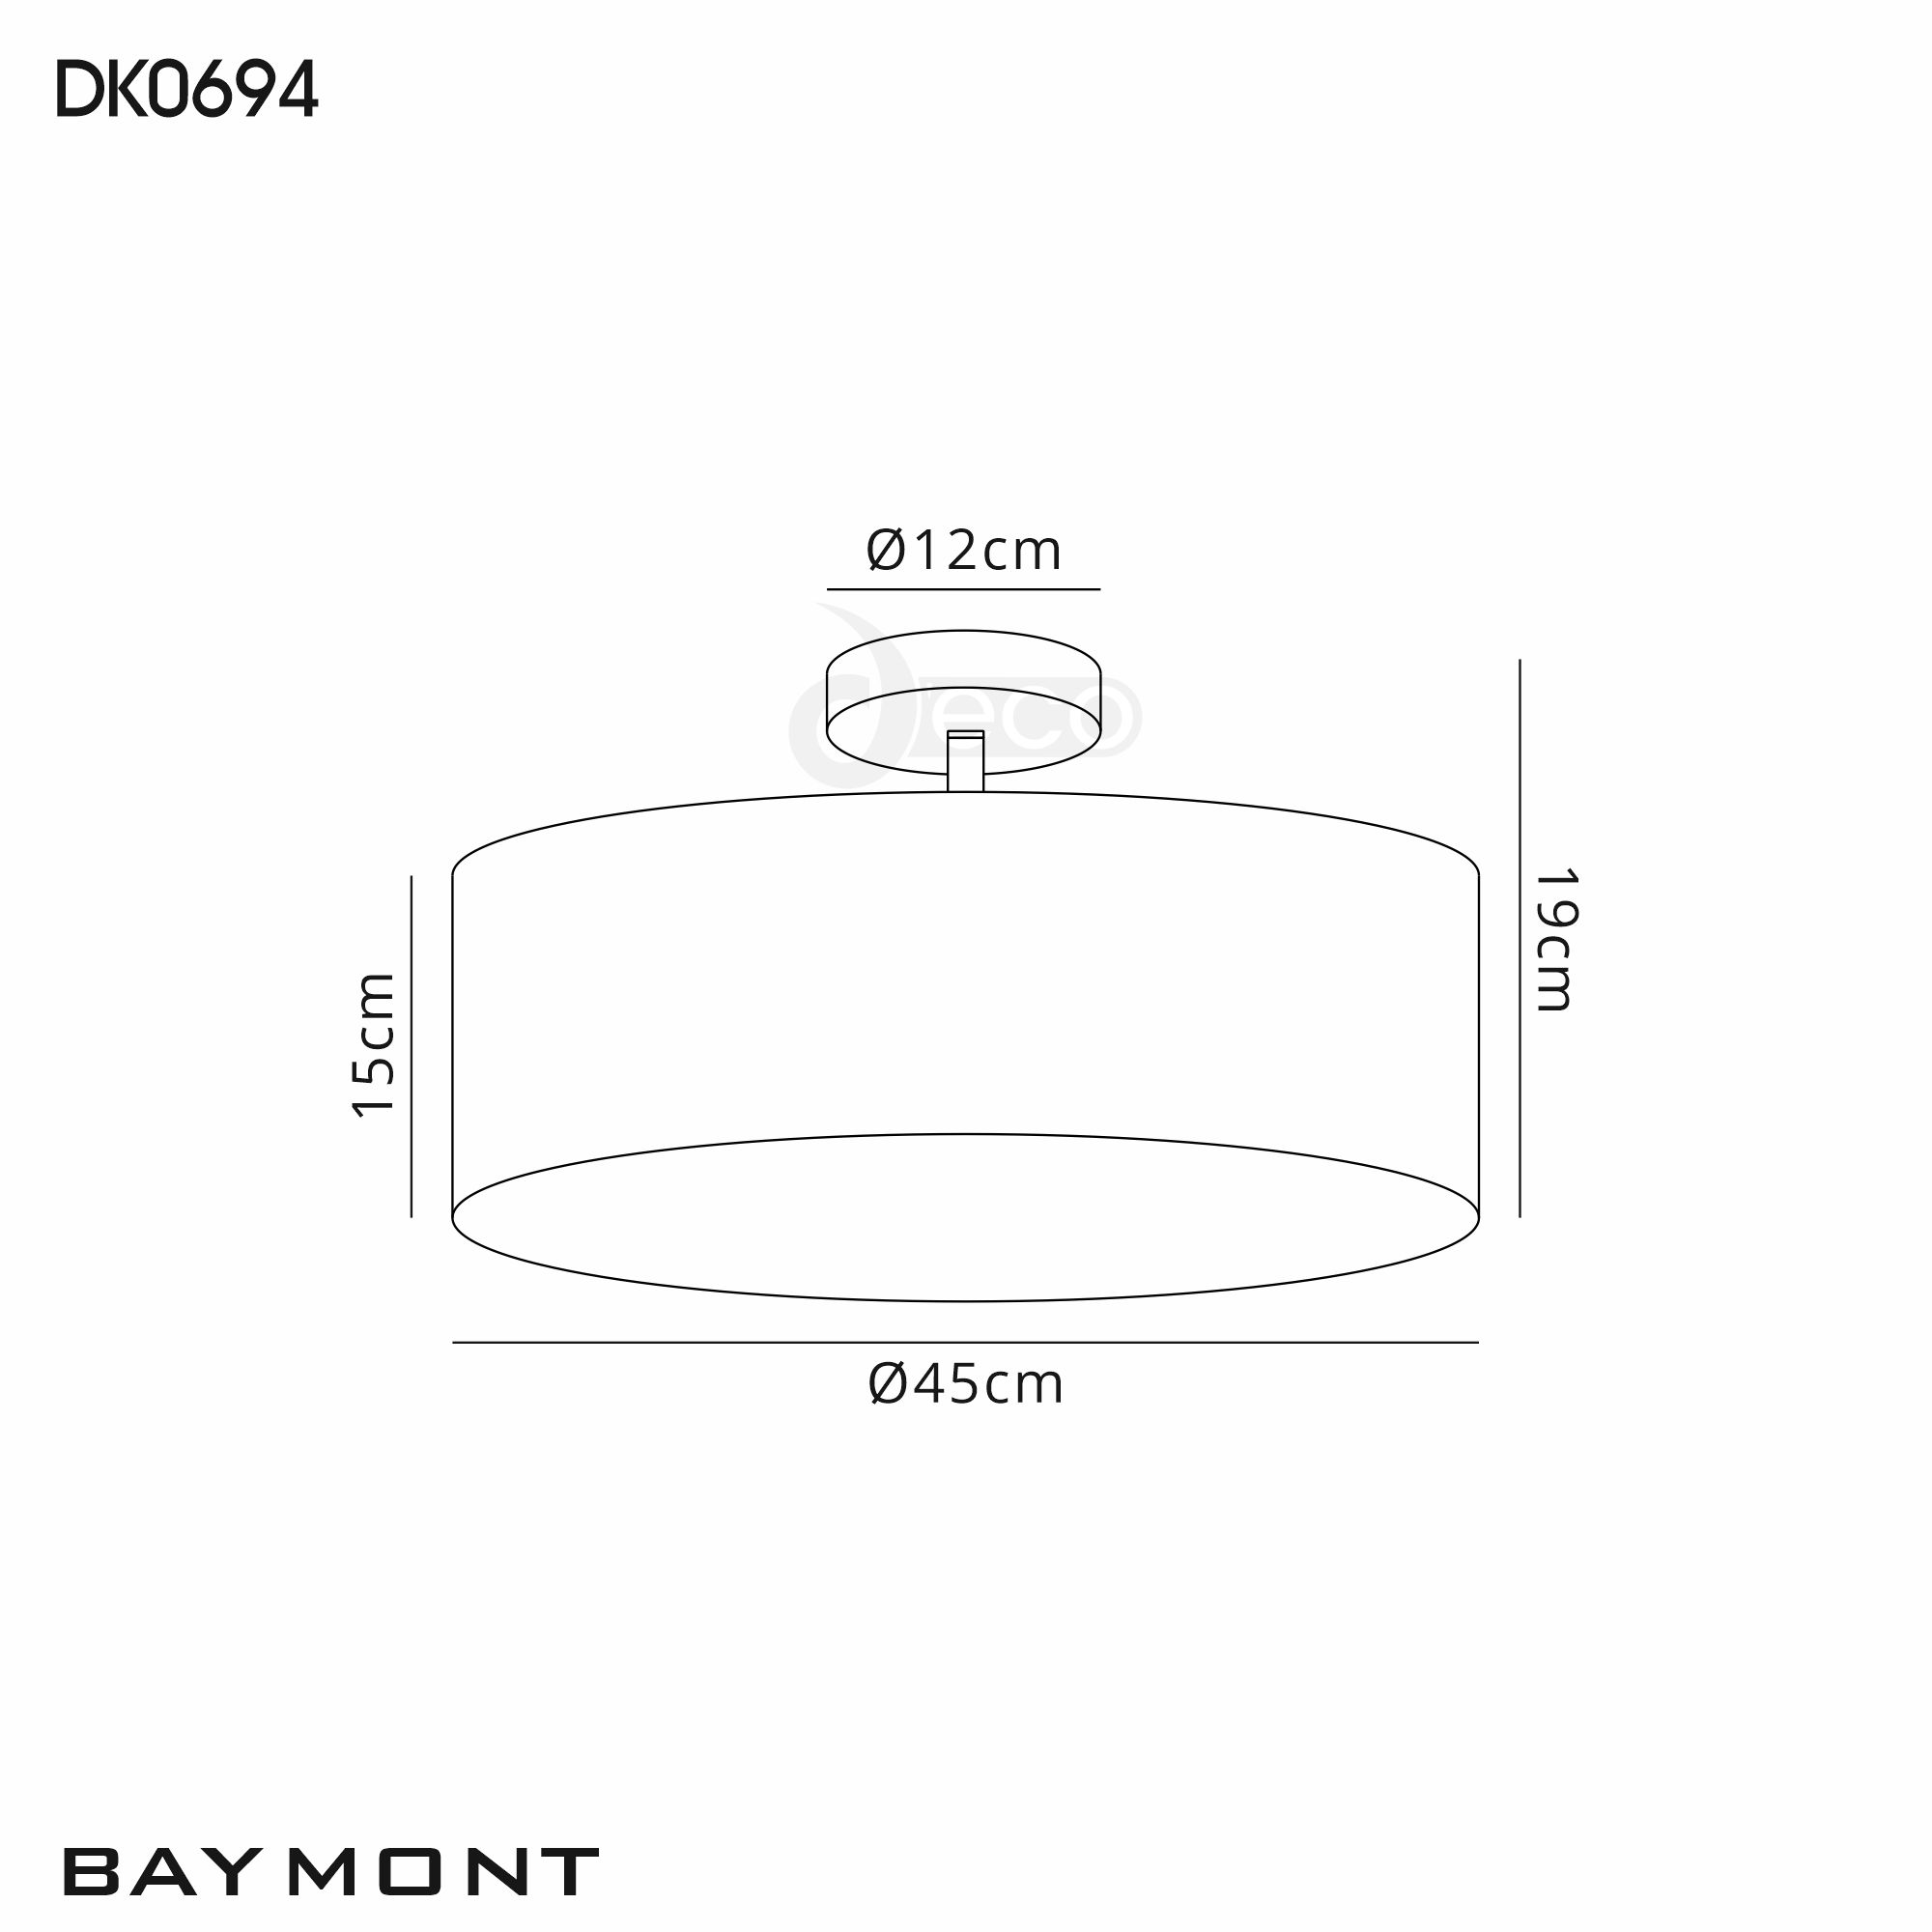 DK0694  Baymont 45cm, Semi Flush 3 Light Polished Chrome, Taupe/Halo Gold